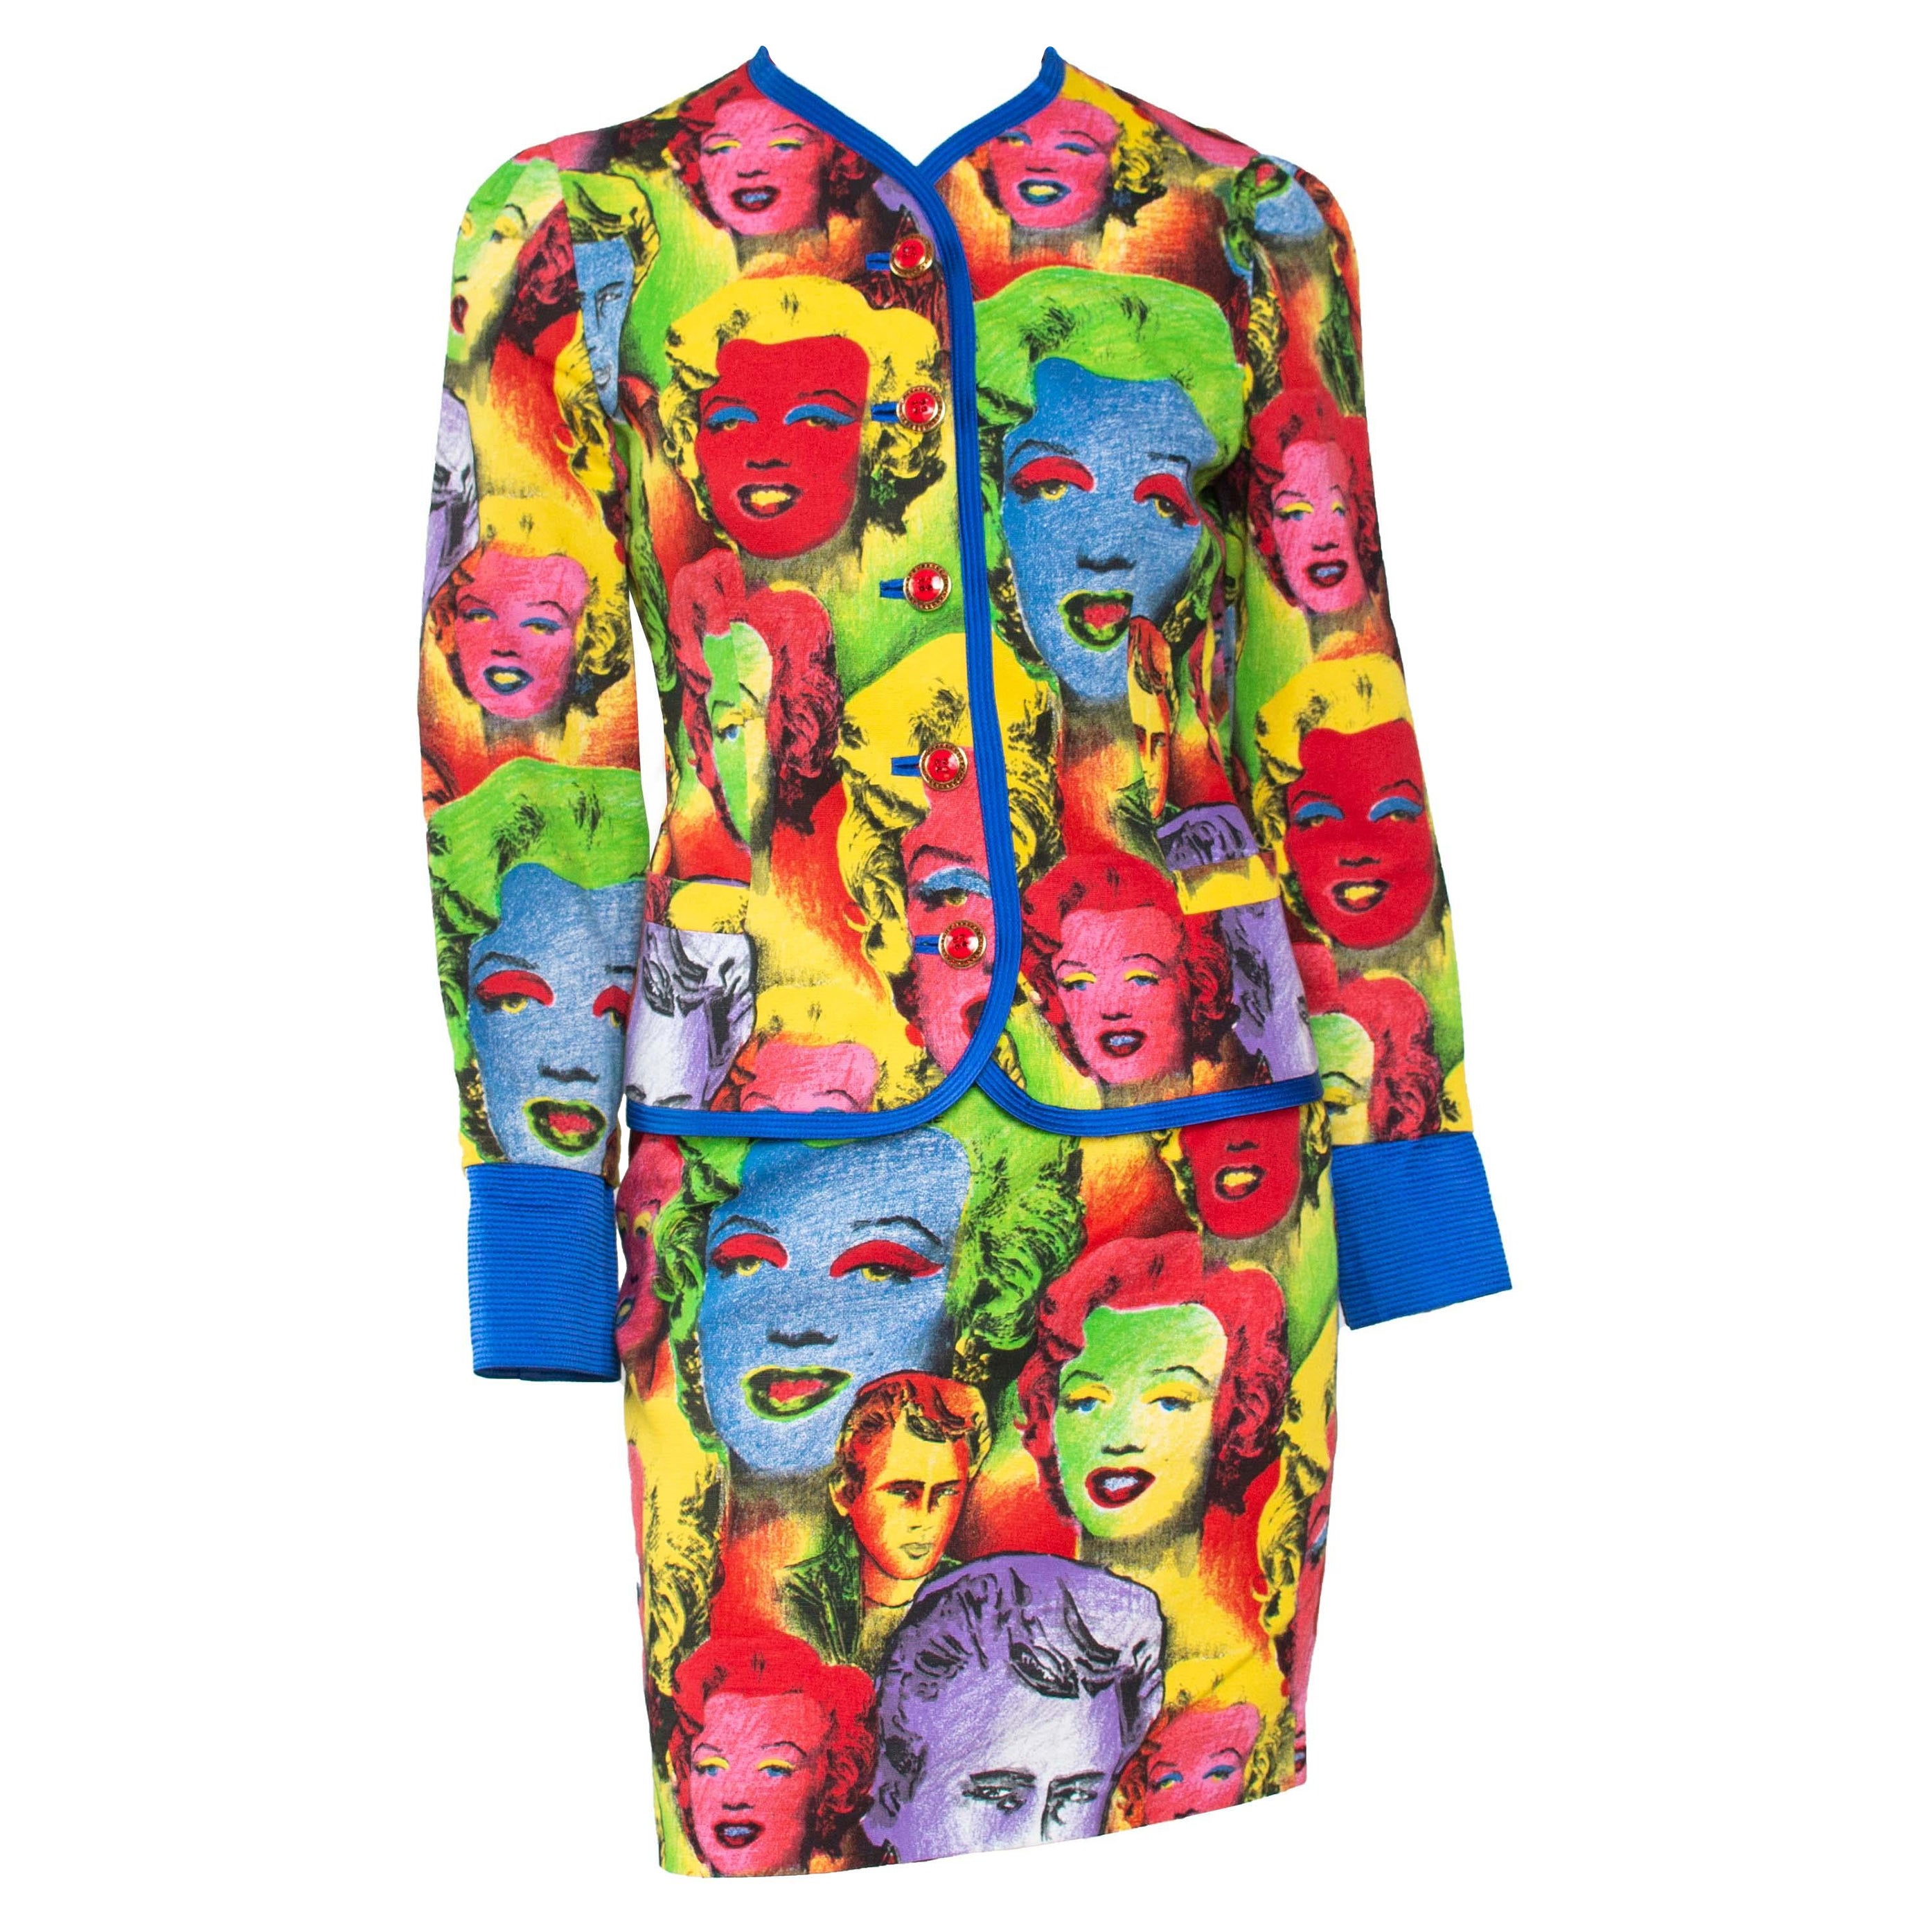 S/S 1991 Gianni Versace Marilyn Monroe Warhol Inspired Print Pop Art Skirt Suit For Sale